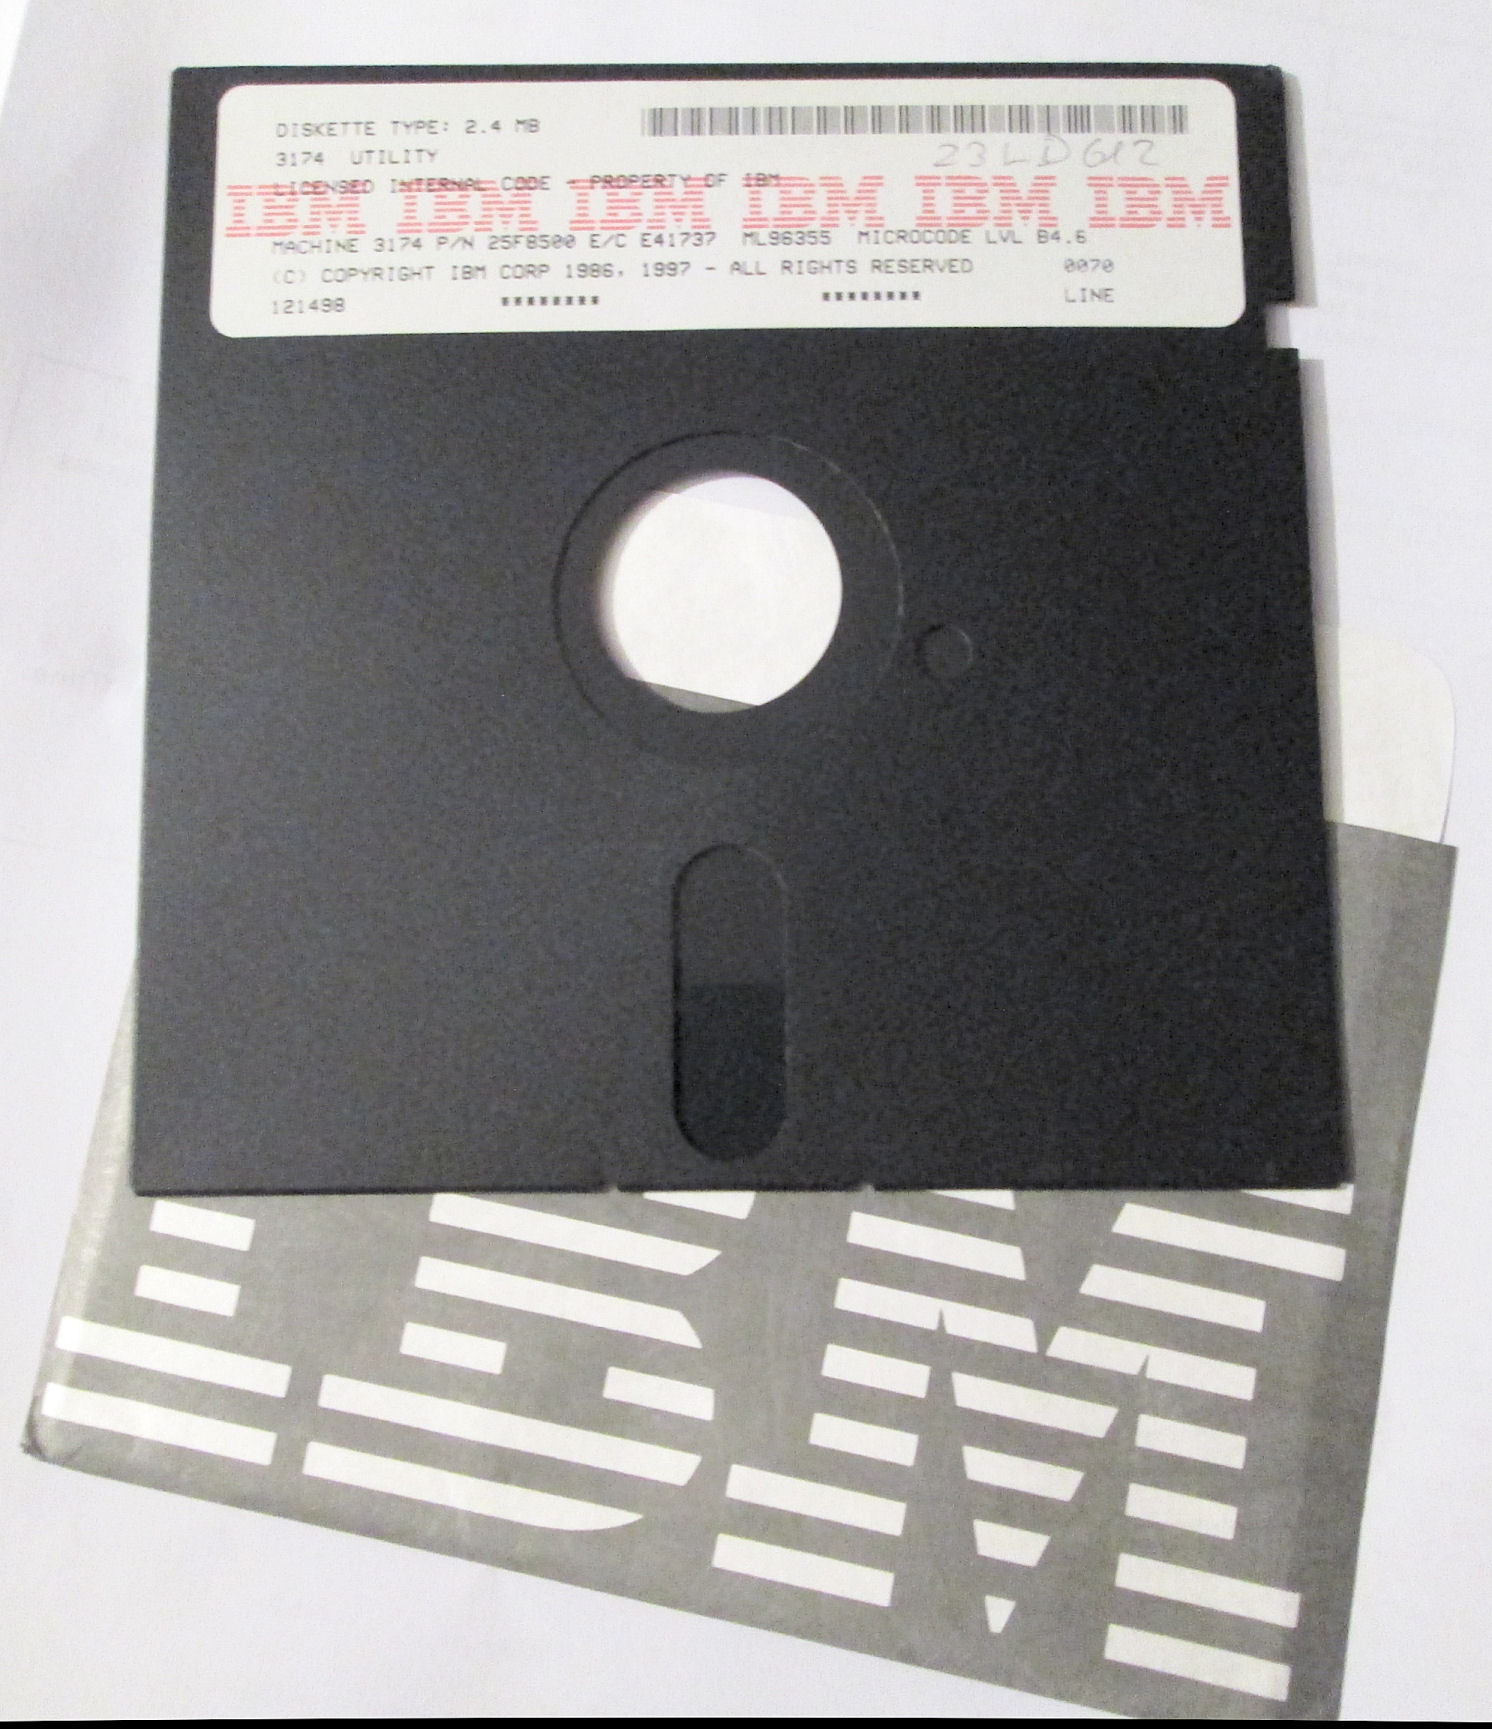 3 1/2" slightly squished box 3.5 in DSDD floppy disks 